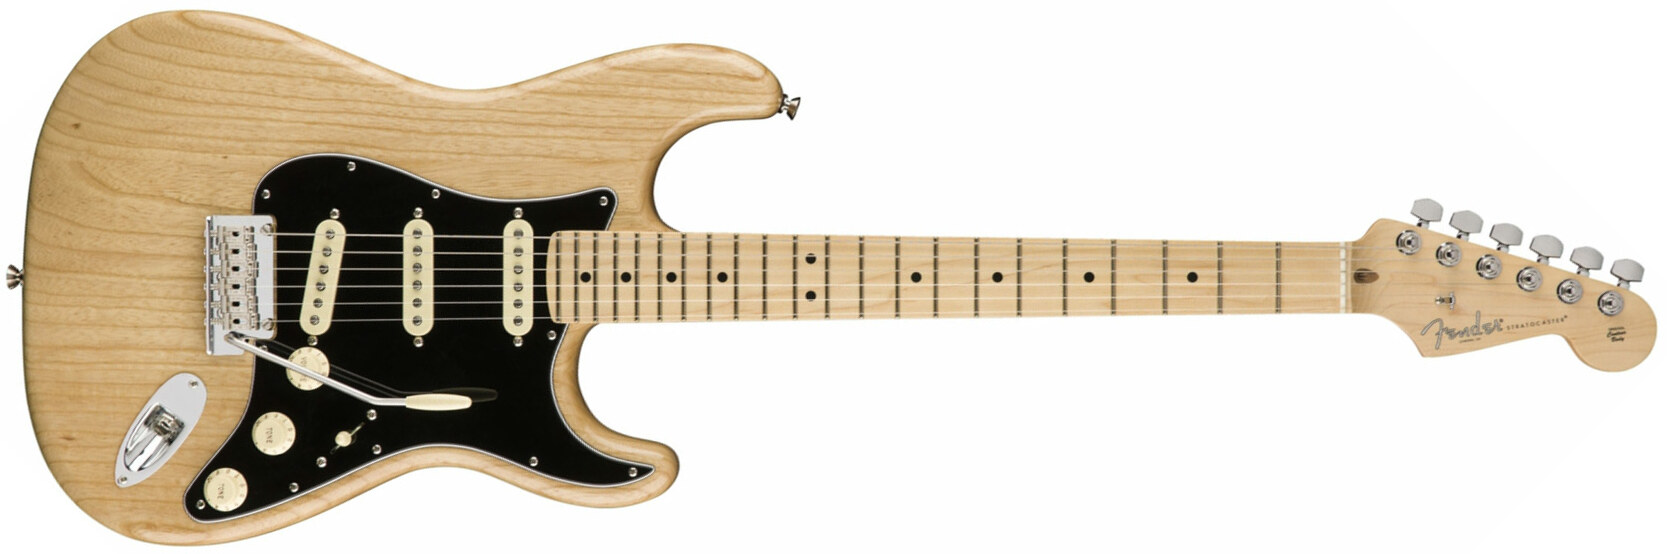 Fender Strat American Professional 3s Usa Mn - Natural - E-Gitarre in Str-Form - Main picture